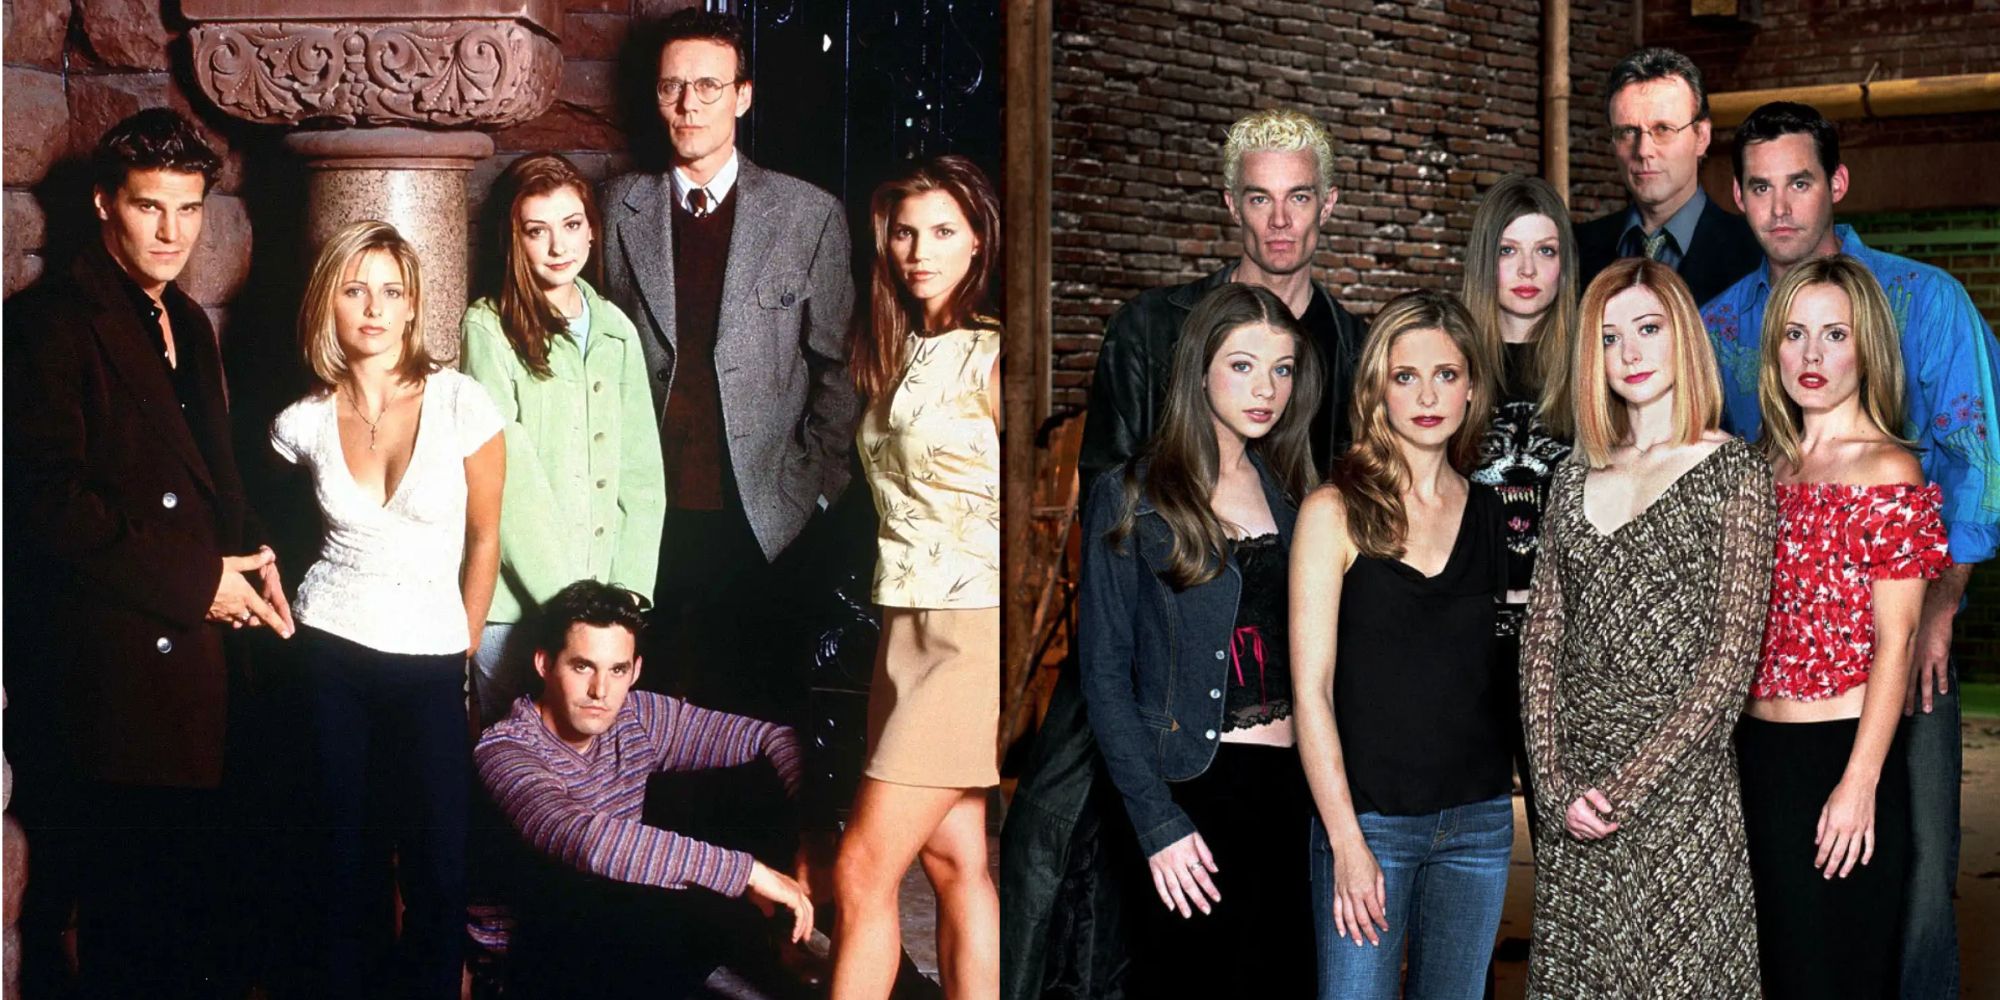 The cast of Buffy Season 1 and Buffy Season 6 gather for one big photo